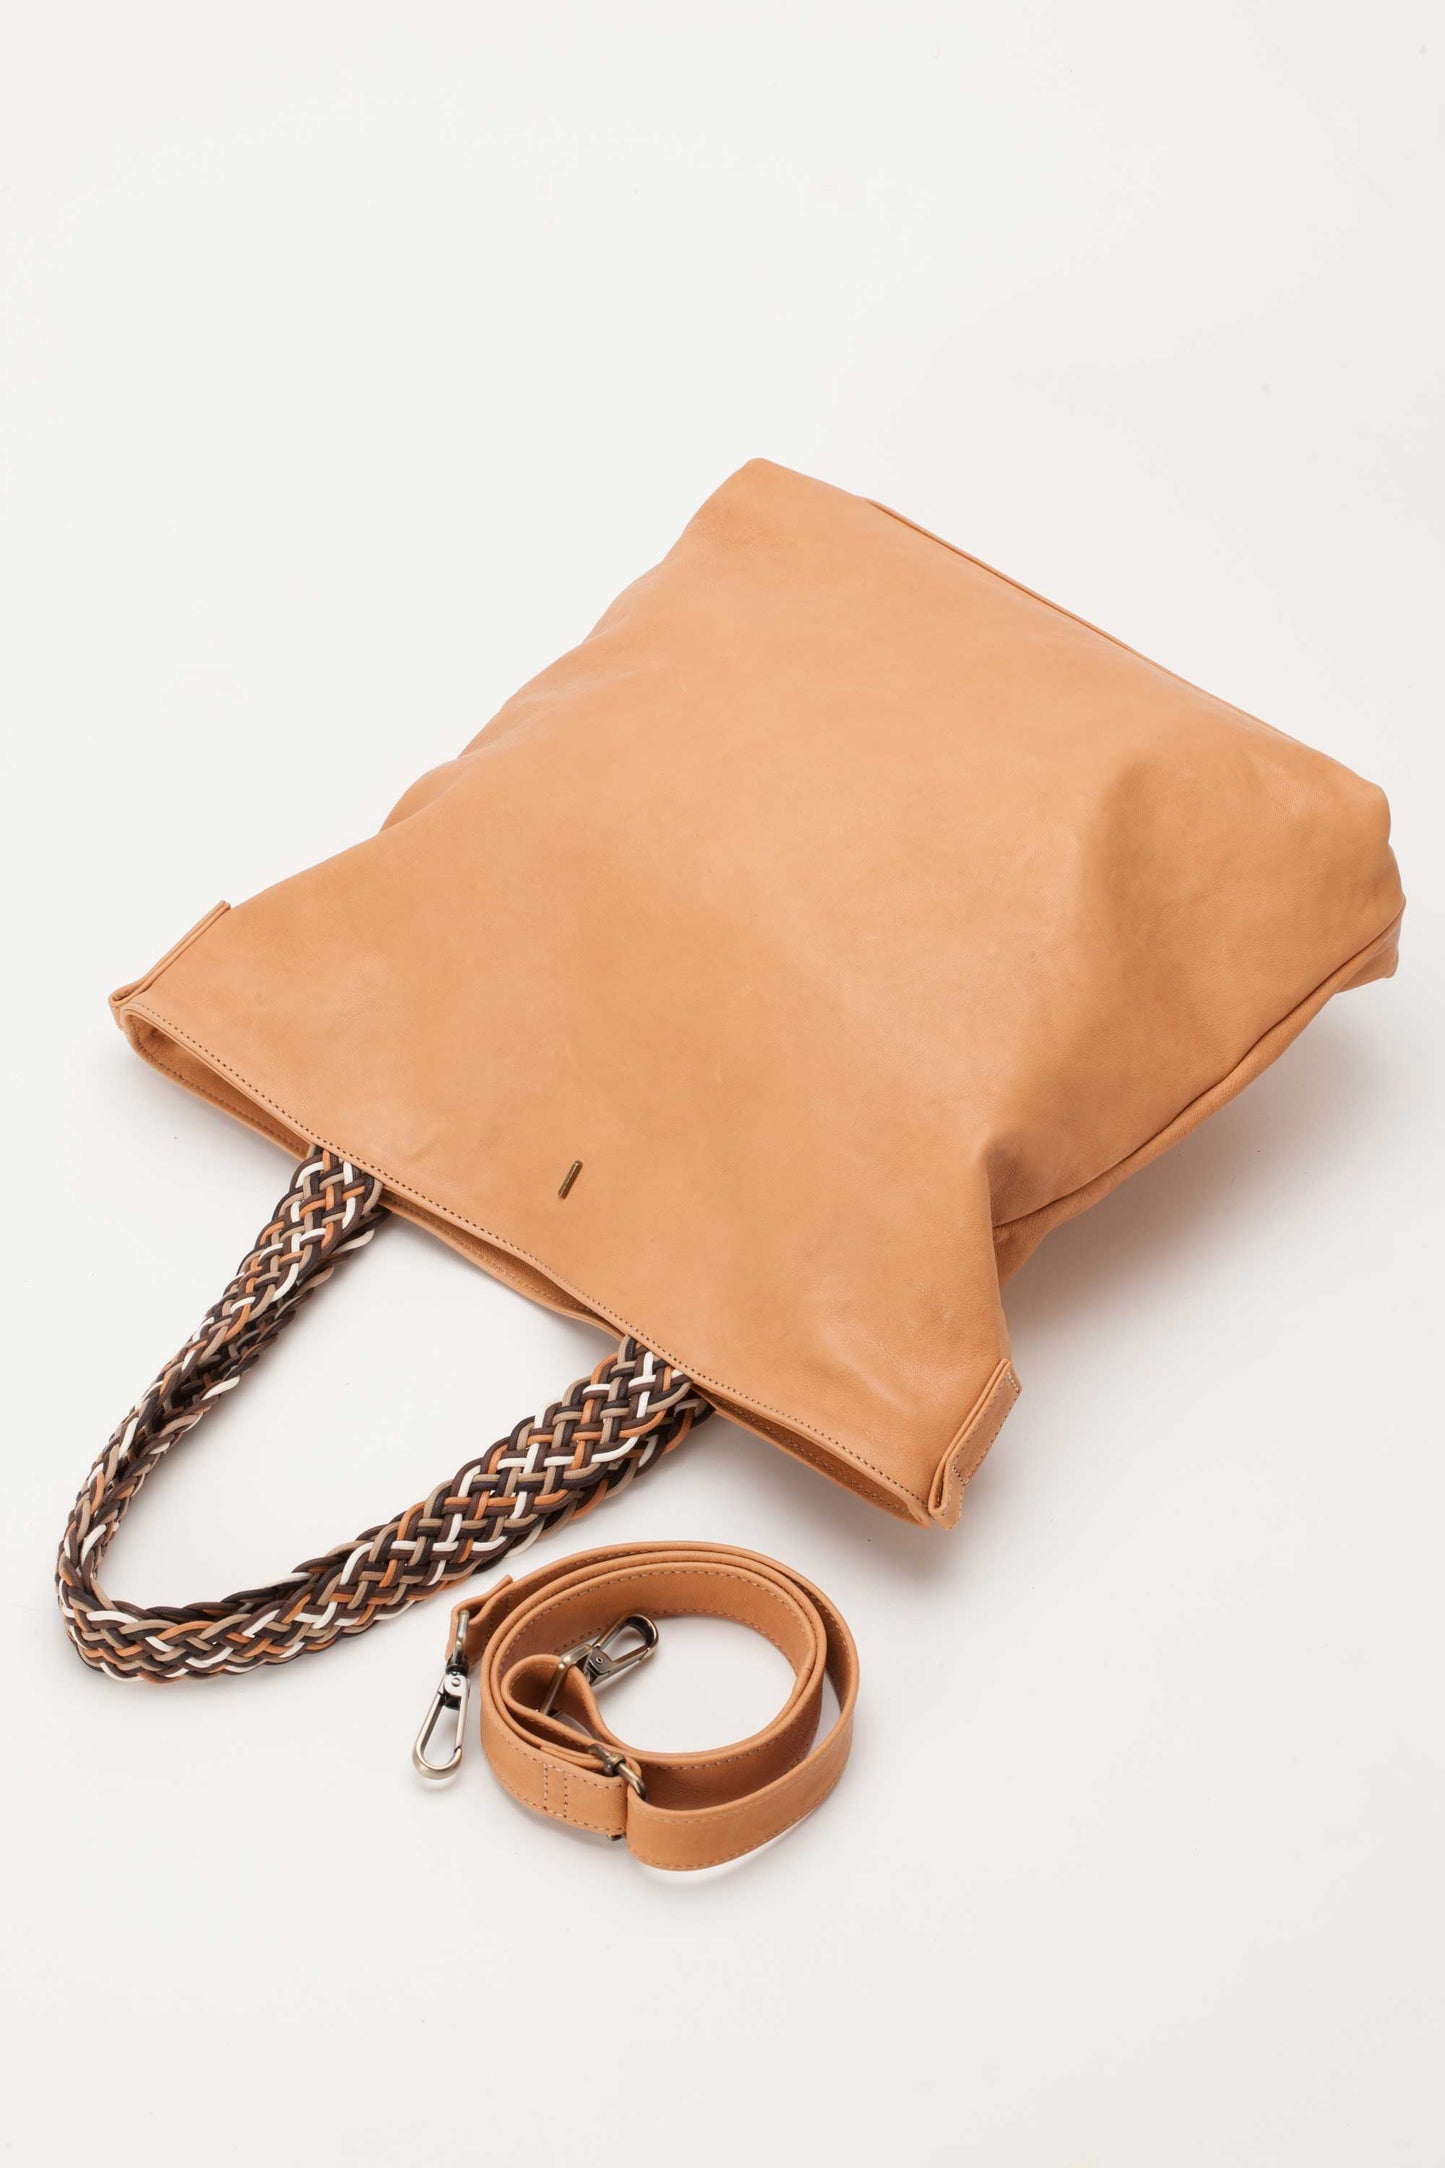 Sofi tote bag in soft nappa leather